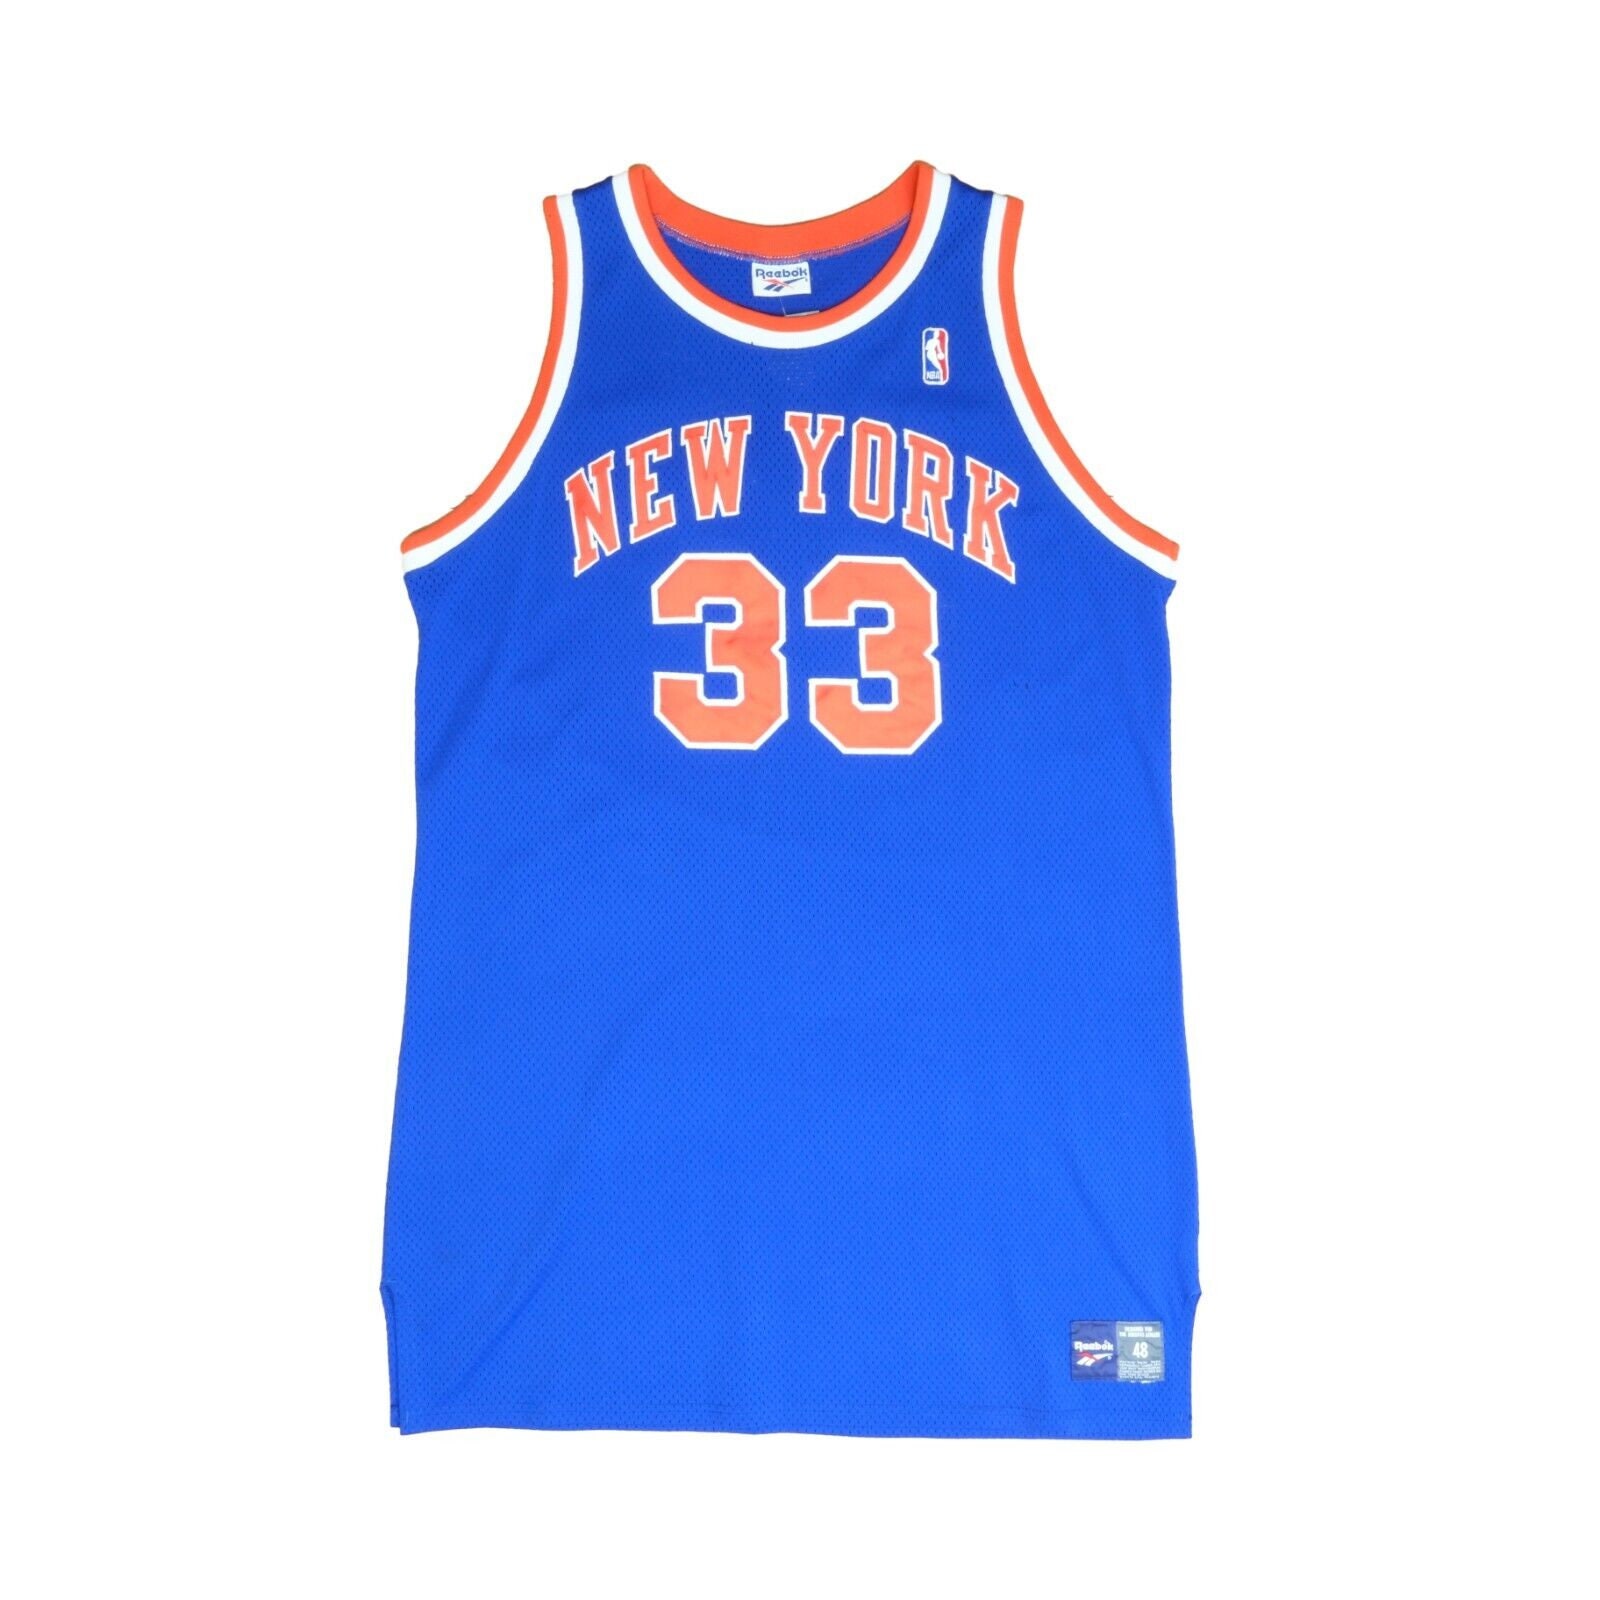 Vintage New York Knicks Authentic Adidas Nate Robinson Jersey 